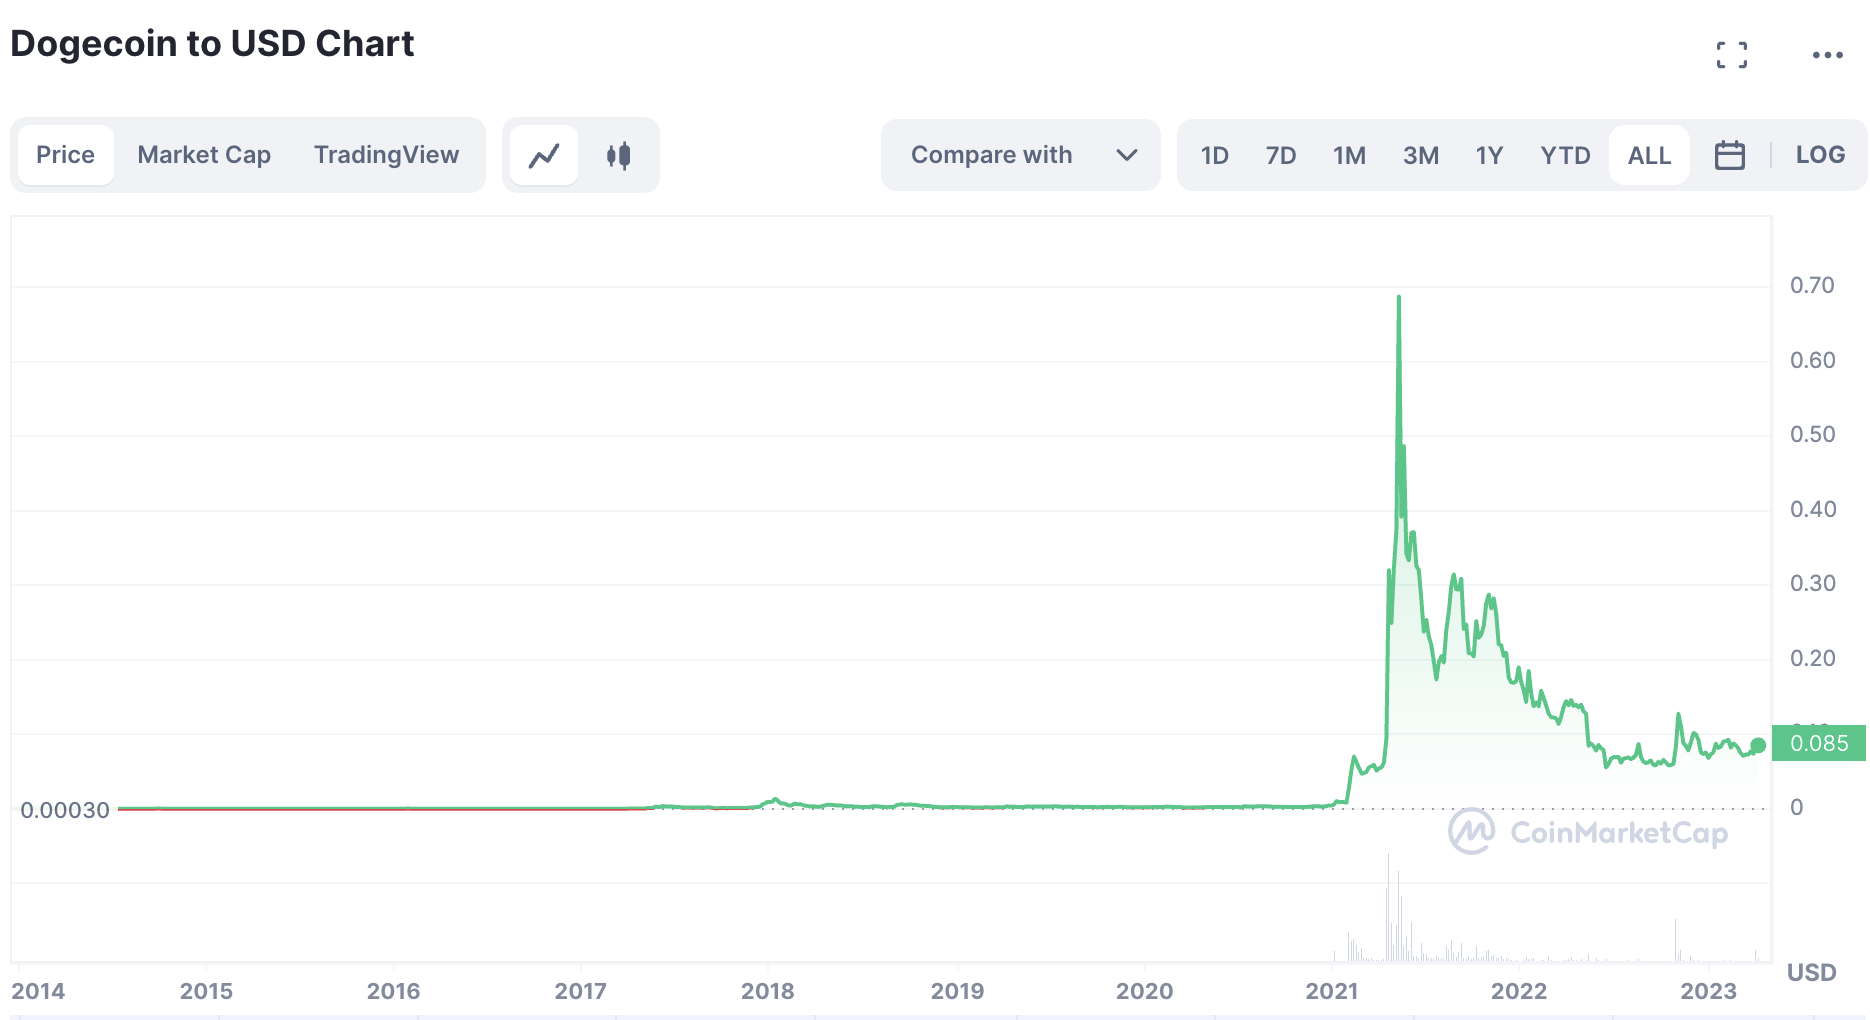 Dogecoin Price Chart 2014-2023